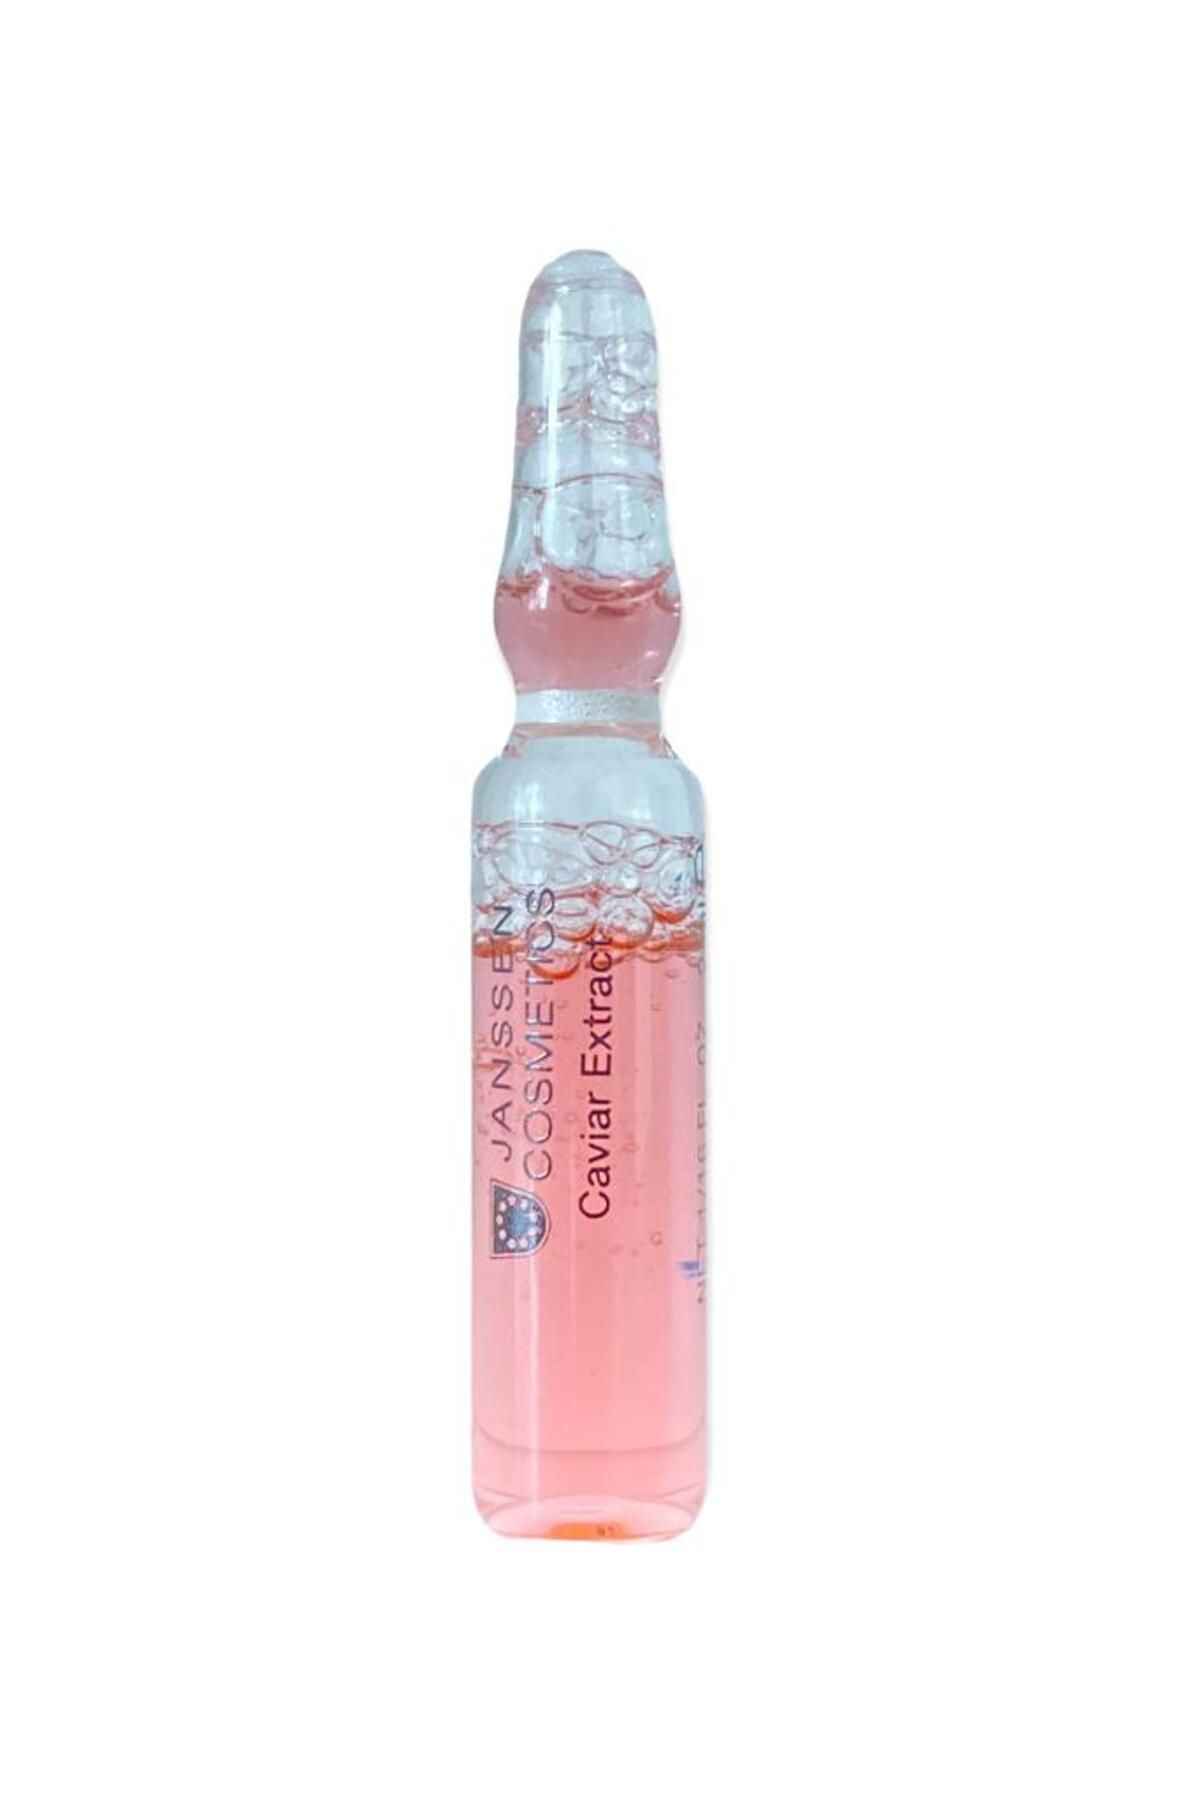 Janssen Cosmetics Caviar Extract 2 ml Ampul Tekli